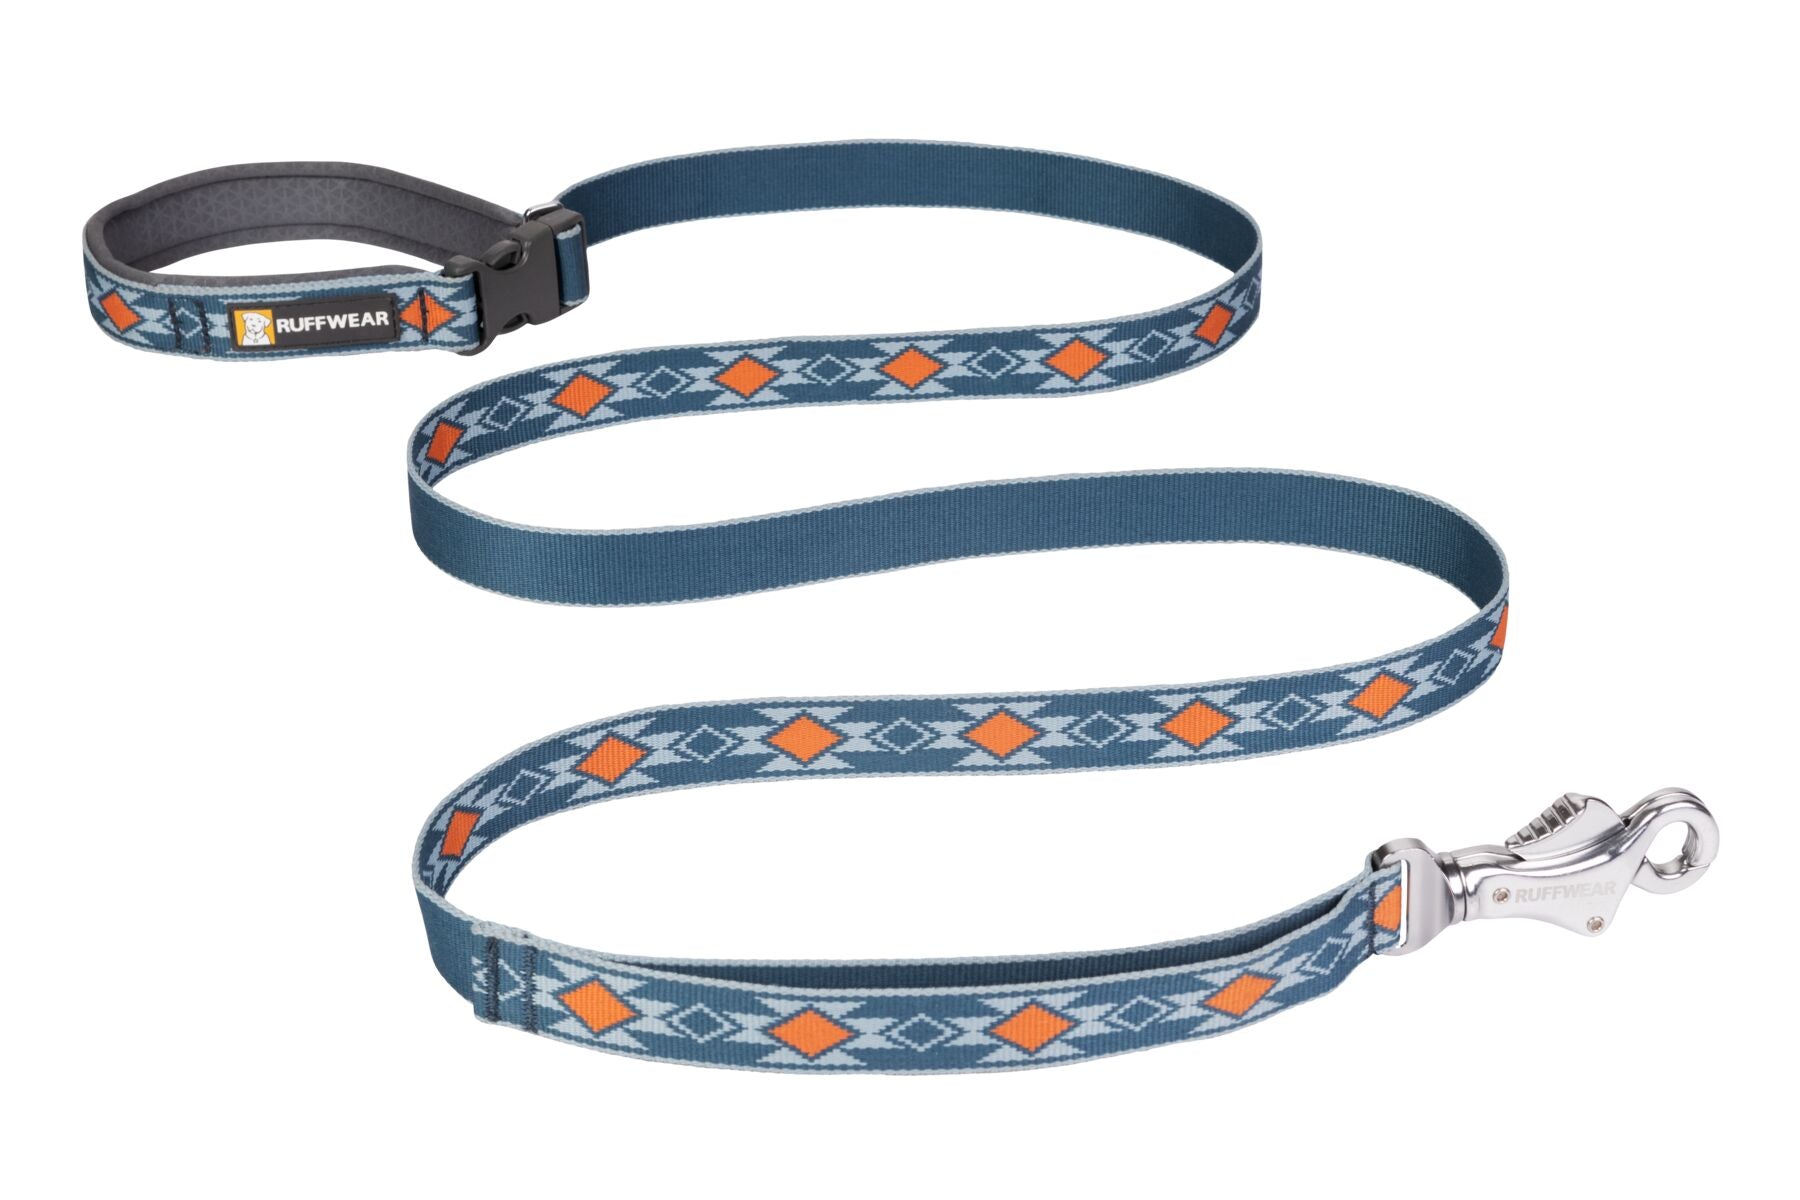 A photo of a Ruffwear leash with the Desert Sunrise Artist Series print.